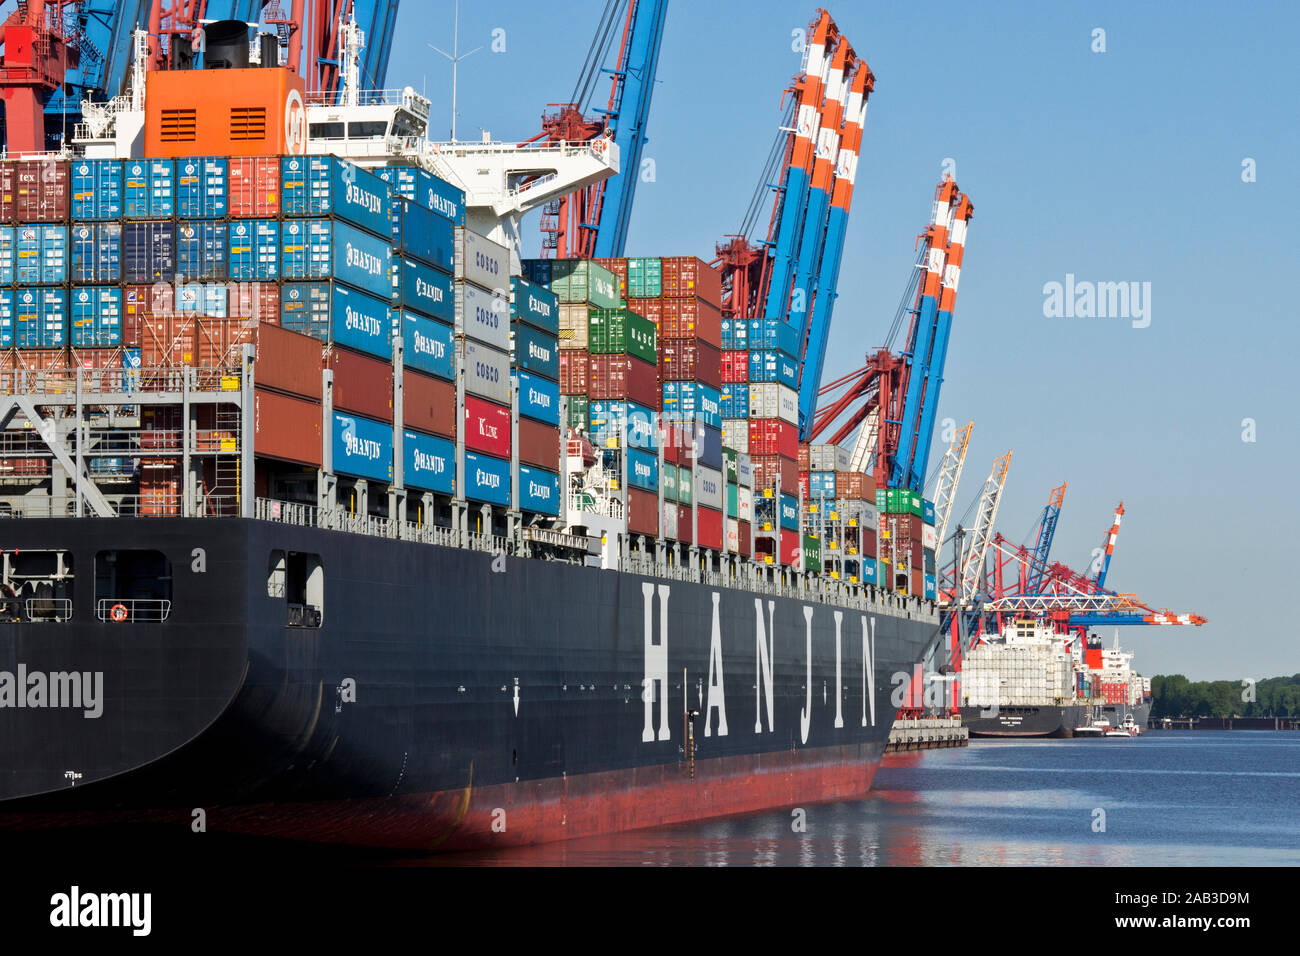 Containerschiffe am Containerterminal Burchardkai im Hamburger Hafen |Container ships at the Port of Hamburg container terminal Burchardkai| Stock Photo